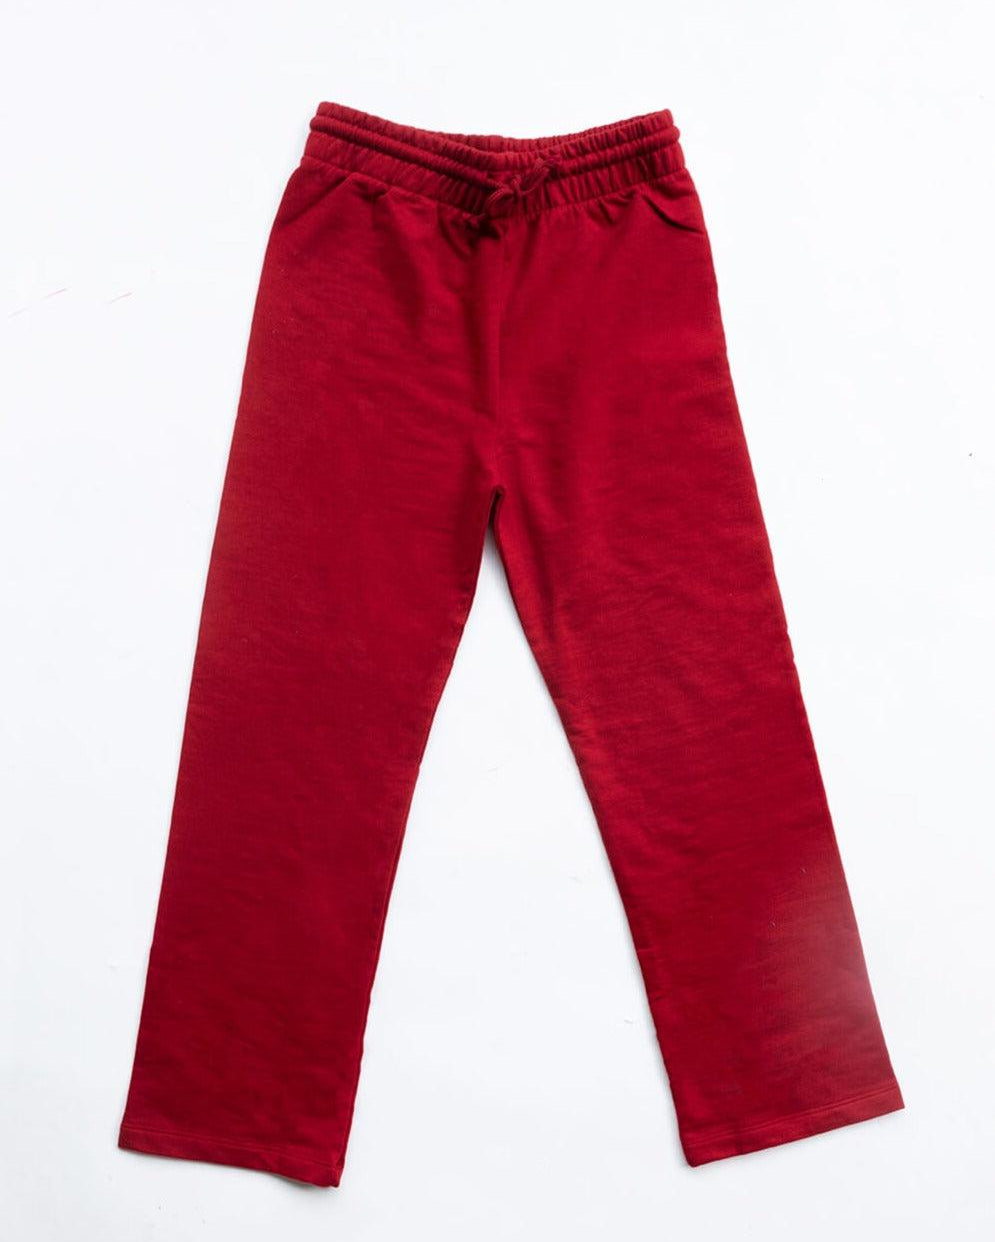 Kids Red Sweatpants